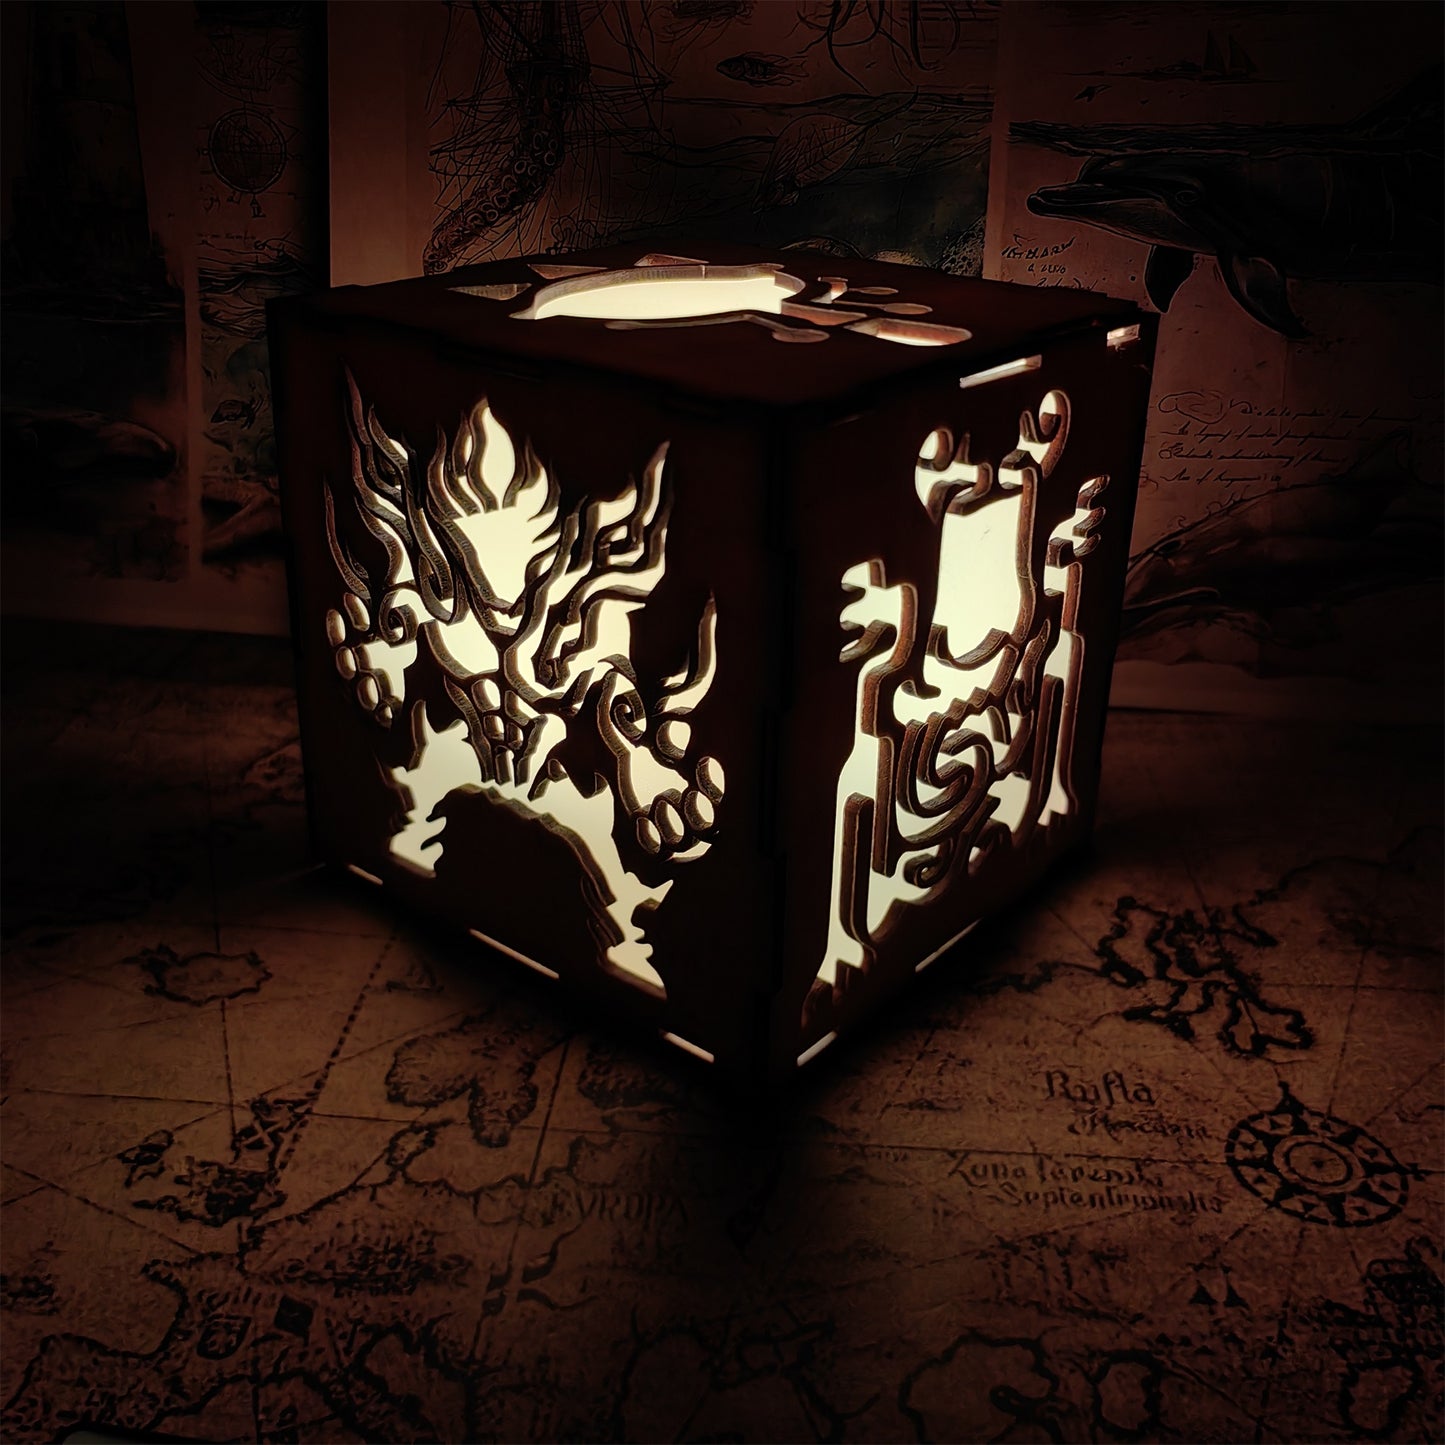 Link Master Icon Wooden Cube Light Game Desk Decor